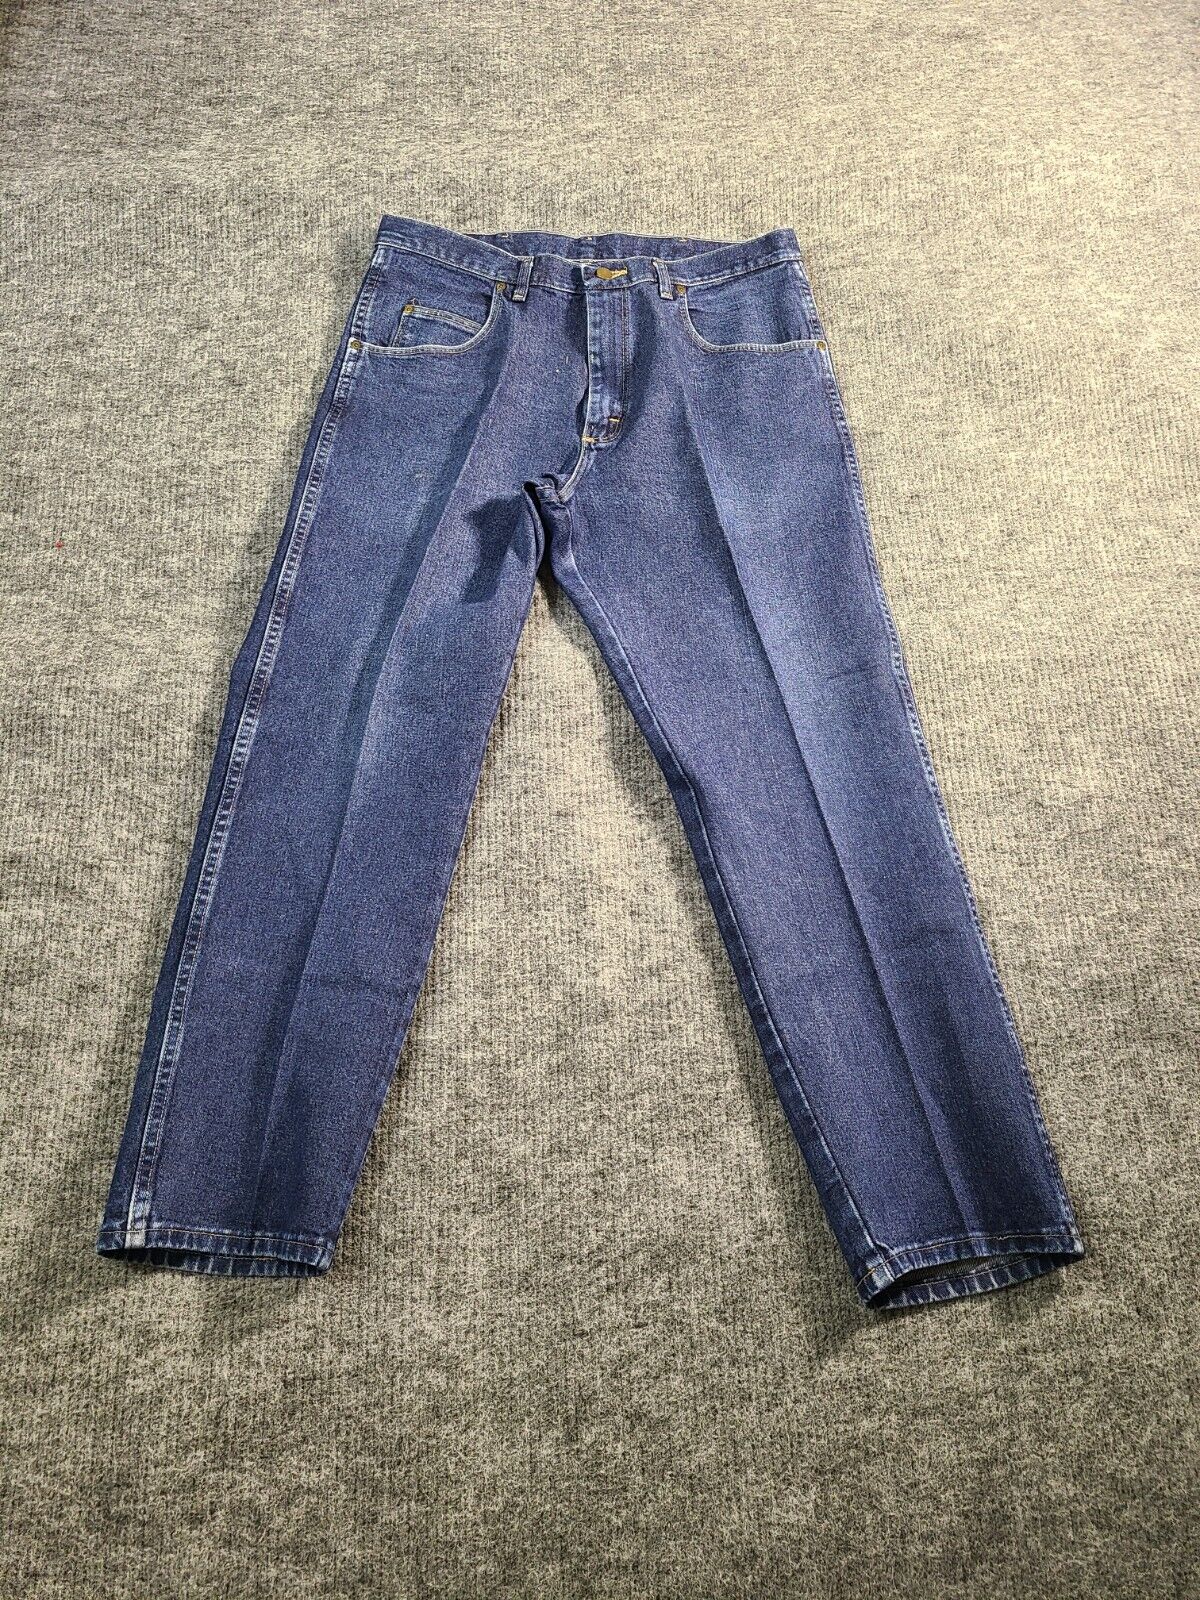 Vintage Wrangler Rugged Wear Jeans Mens 36x30 Blue Denim Western Cowboy  Pants | eBay